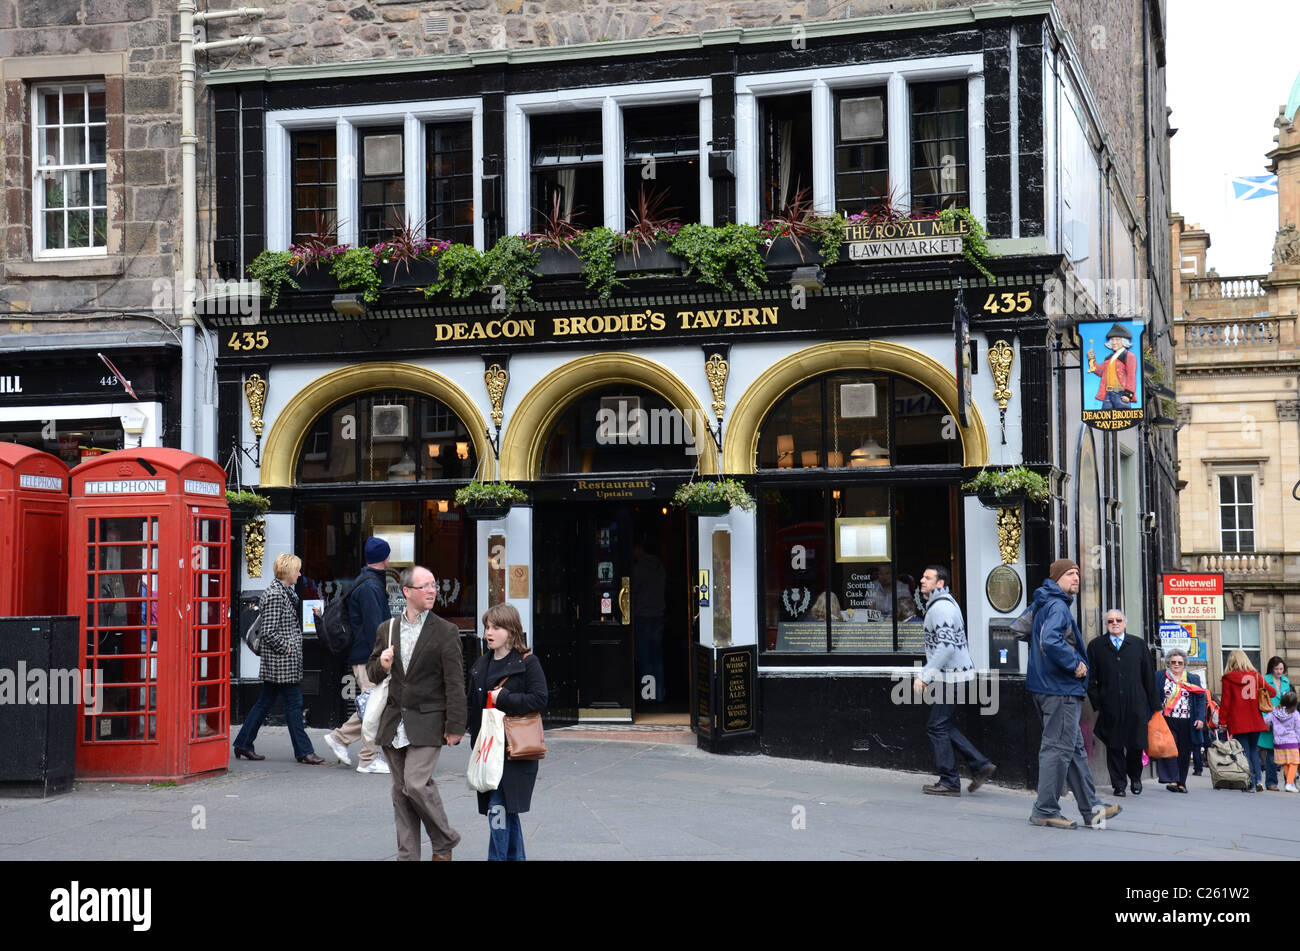 Deacon Brodie's Tavern on the Royal Mile in Edinburgh Stock Photo